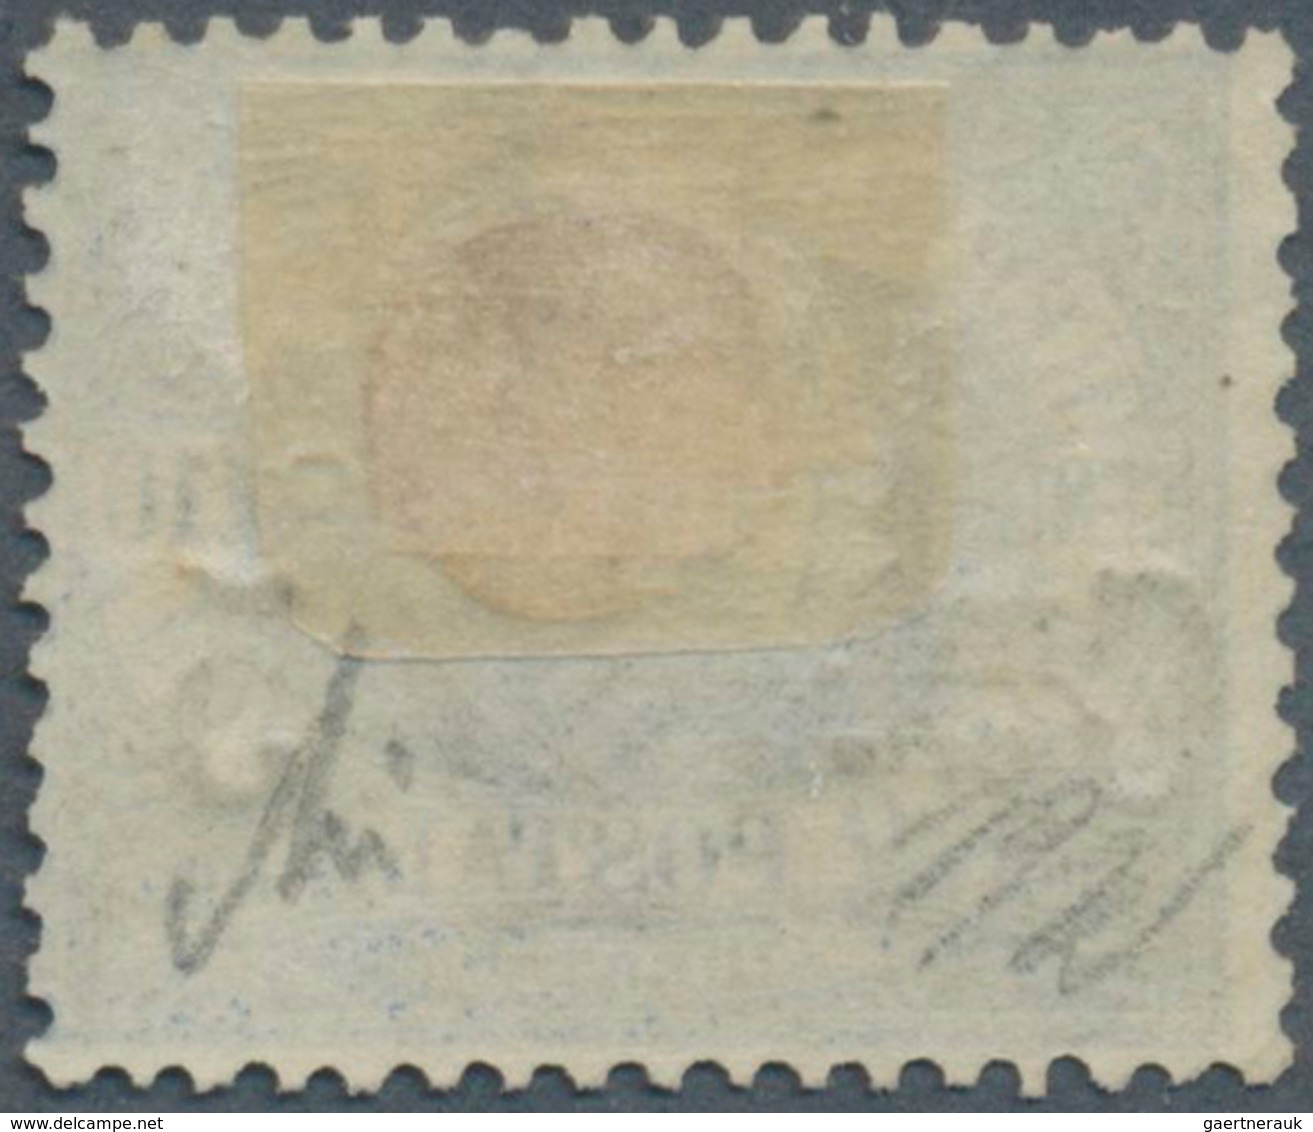 01069 San Marino: 1892, "Cmi 5" On 10 C Ultramarin, Unused With Original Gum In Perfect Condition, Signed - Neufs